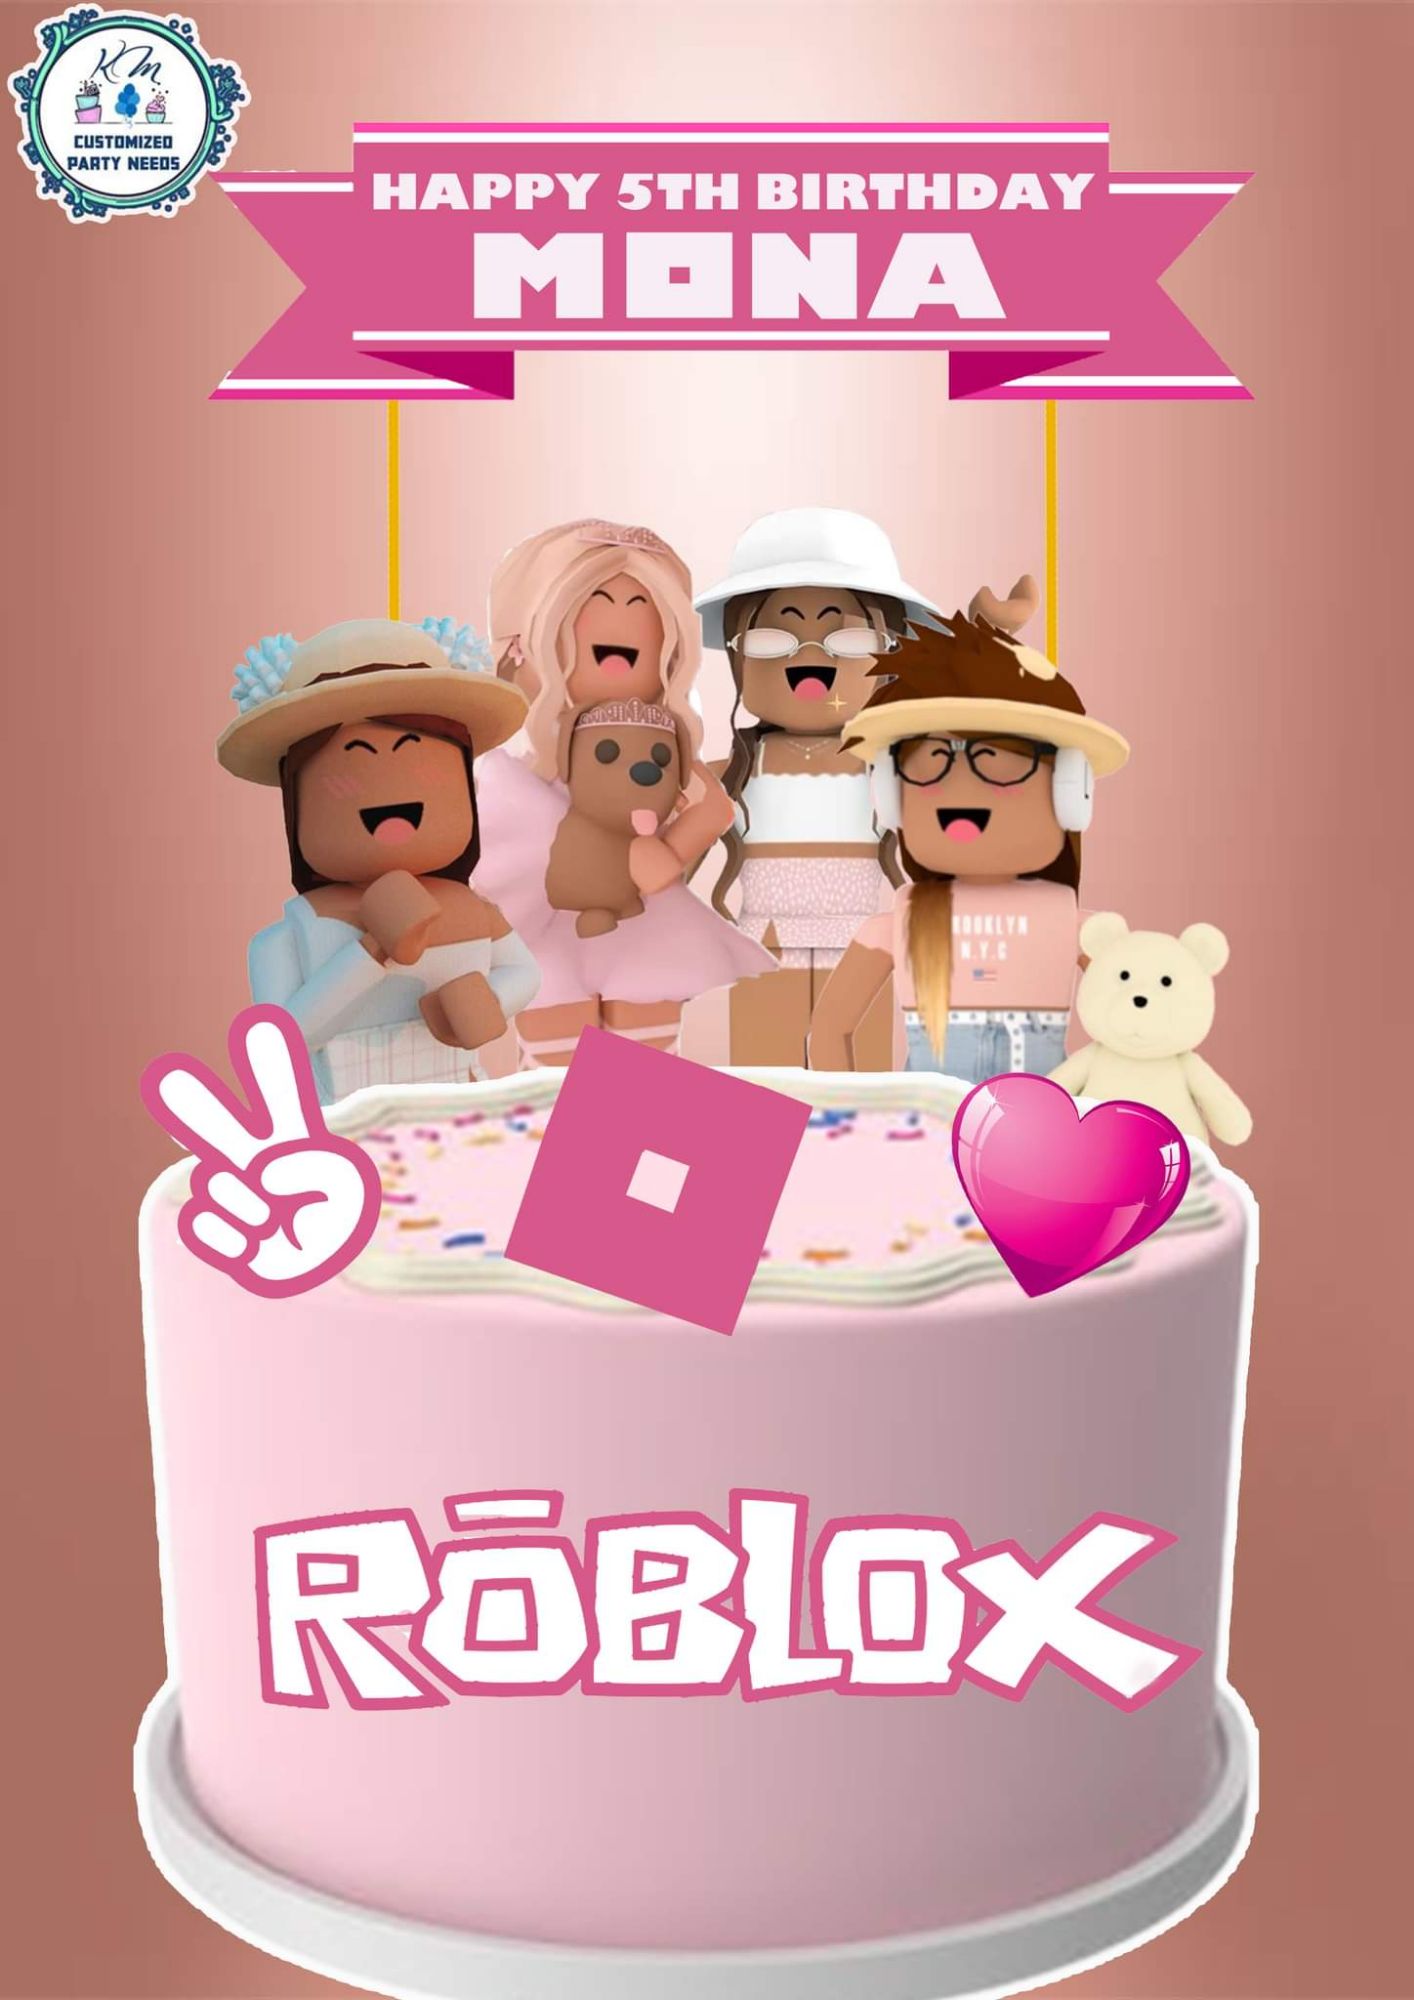 Roblox Themed Cake - Party Kracker Shop